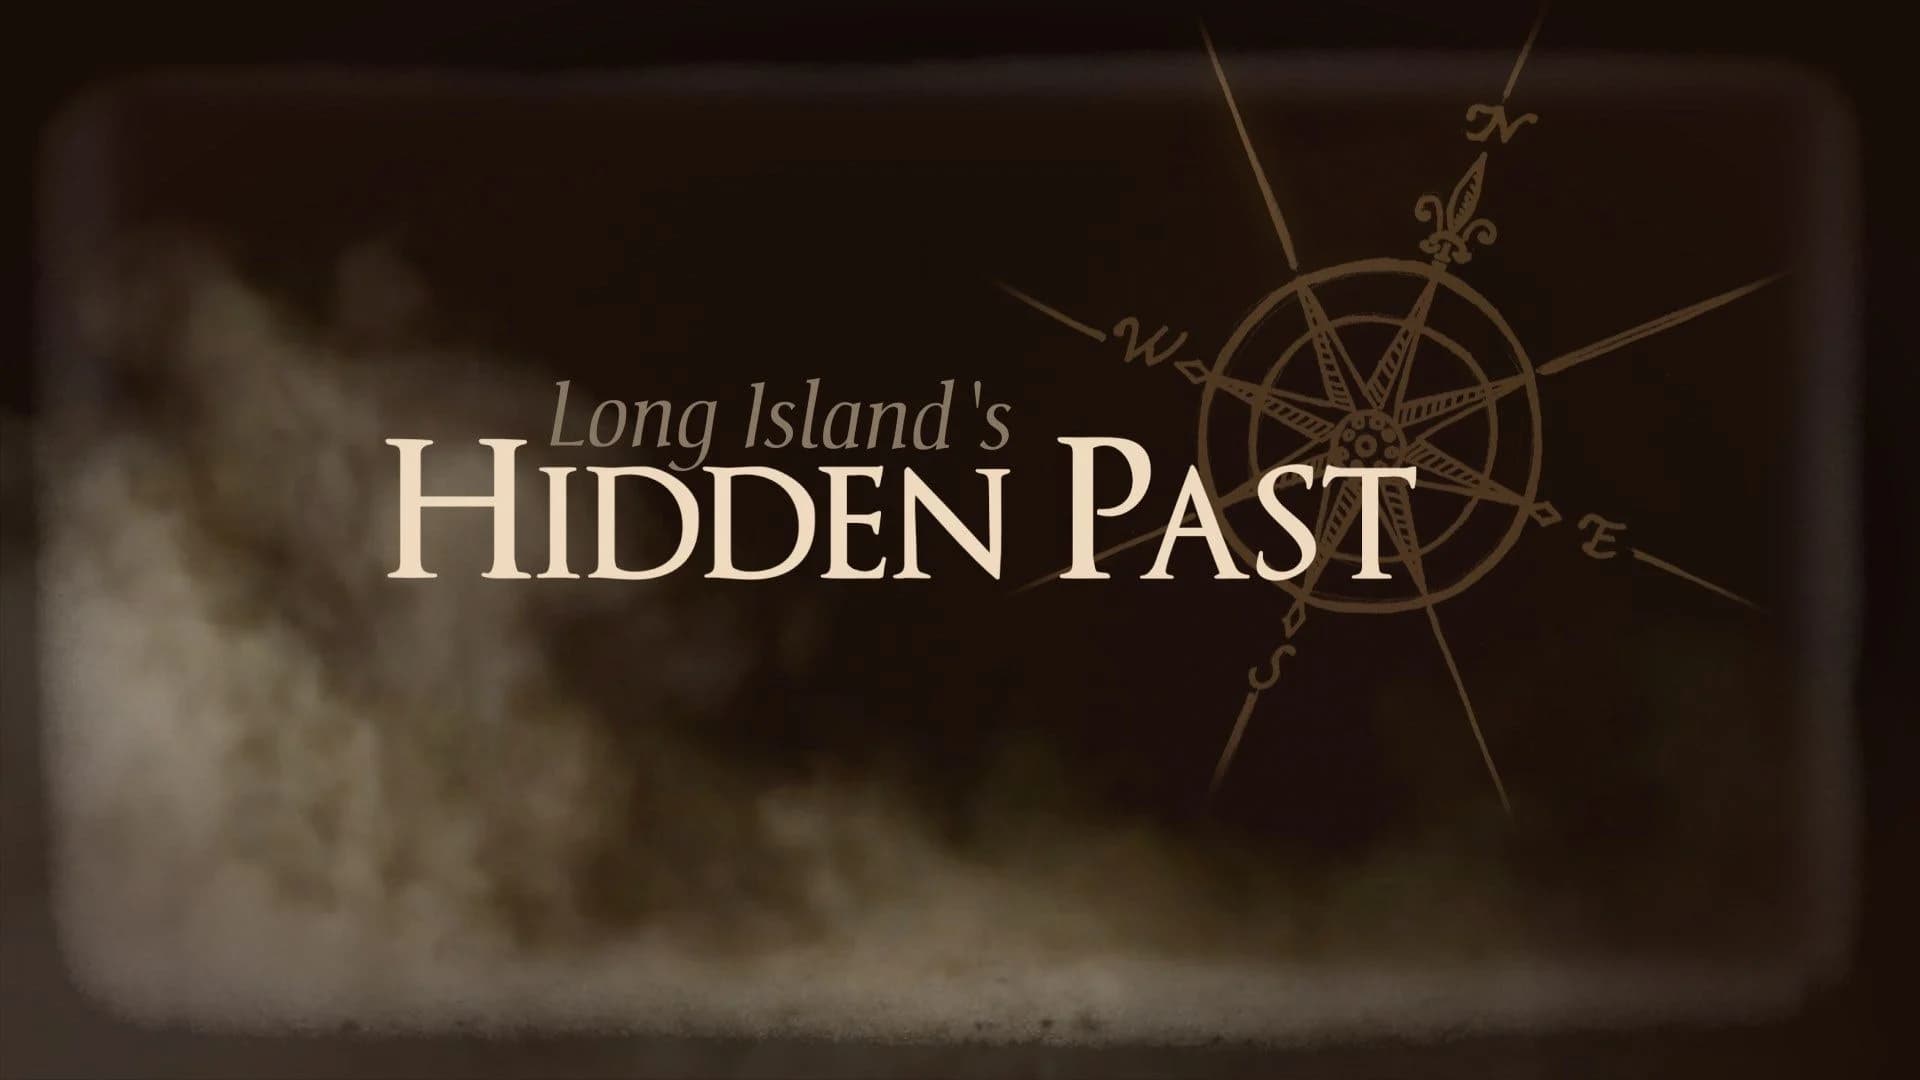 2018 Long Island's Hidden Past: More Information